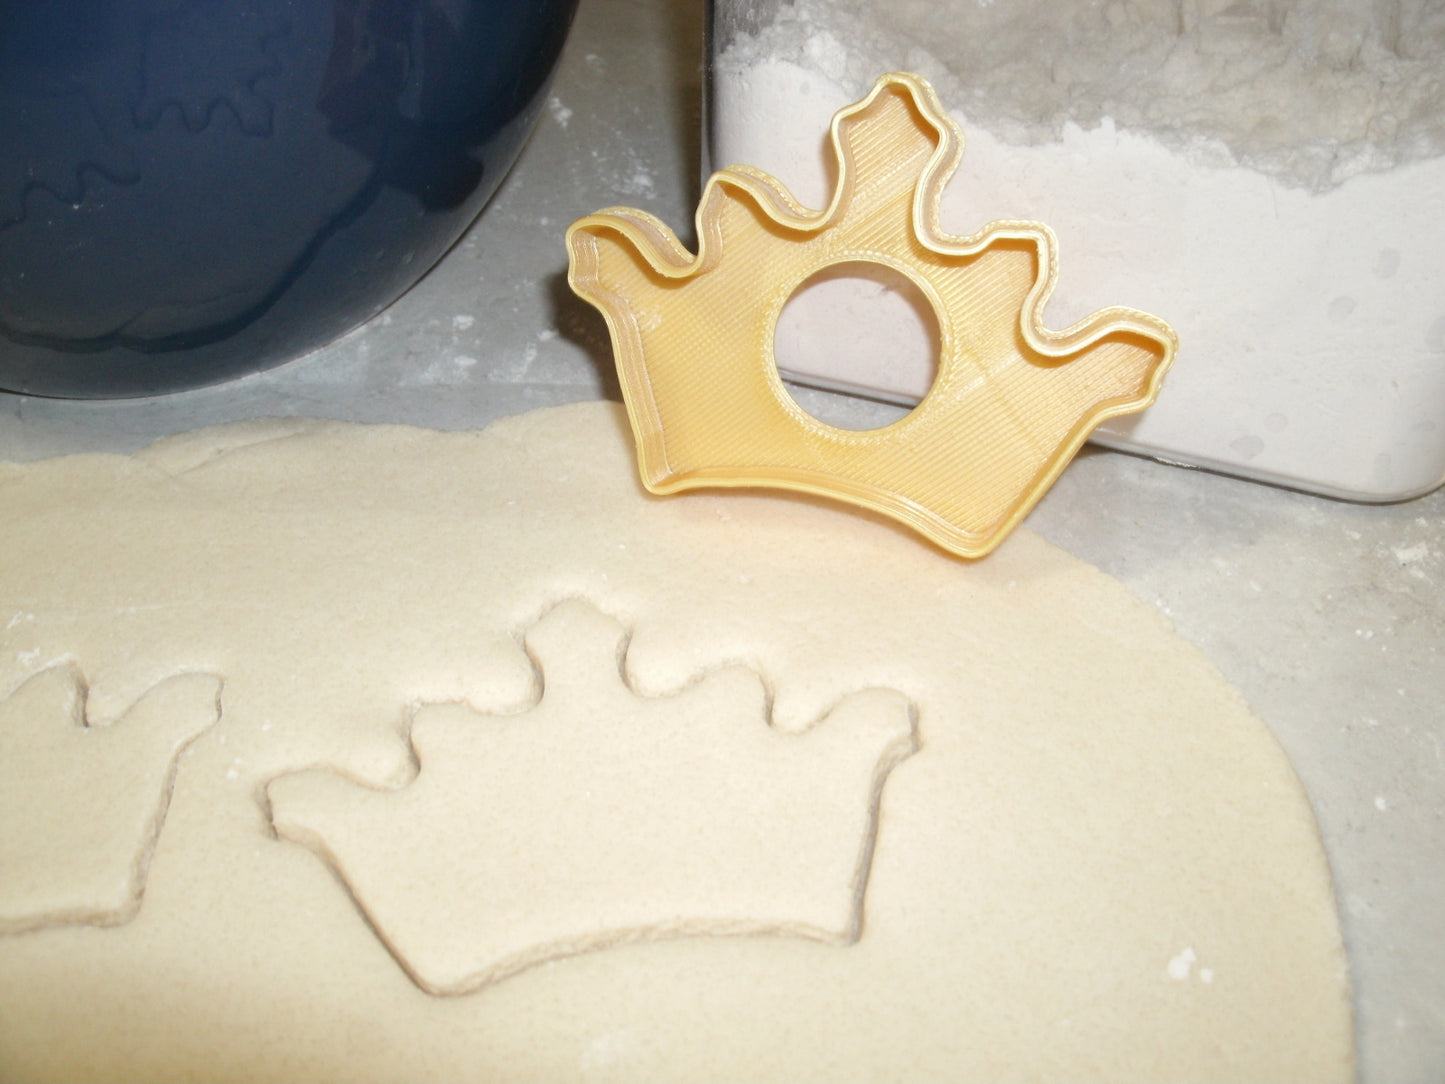 Crown Tiara Royal Queen King Princess Prince Cookie Cutter Made in USA PR619